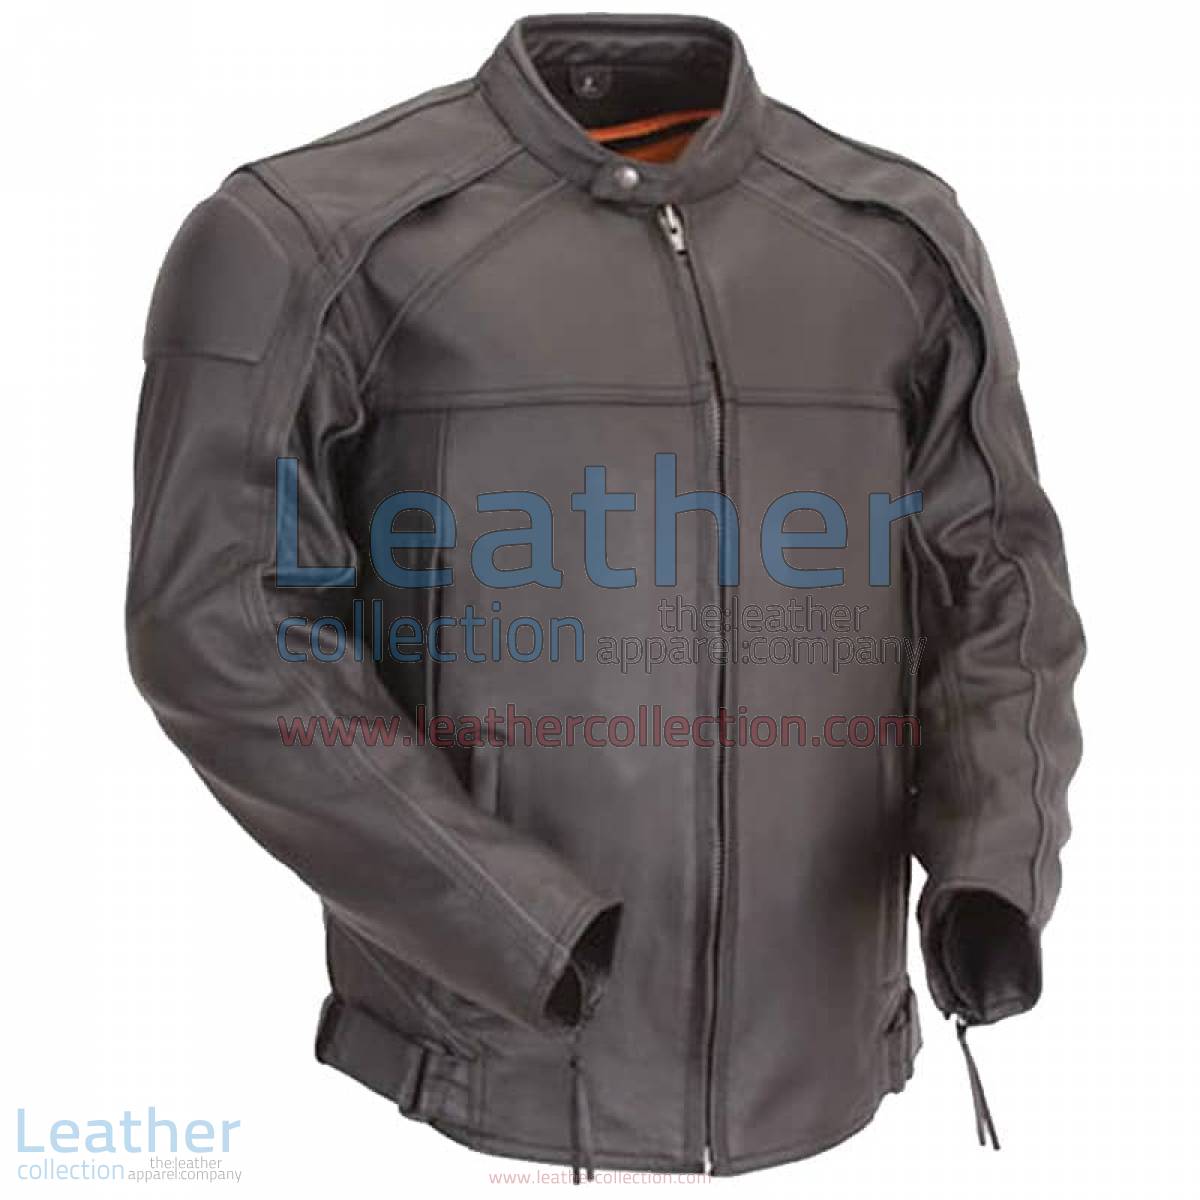 Leather Motorcycle Jacket with Reflective Piping | motorcycle jacket,leather motorcycle jacket